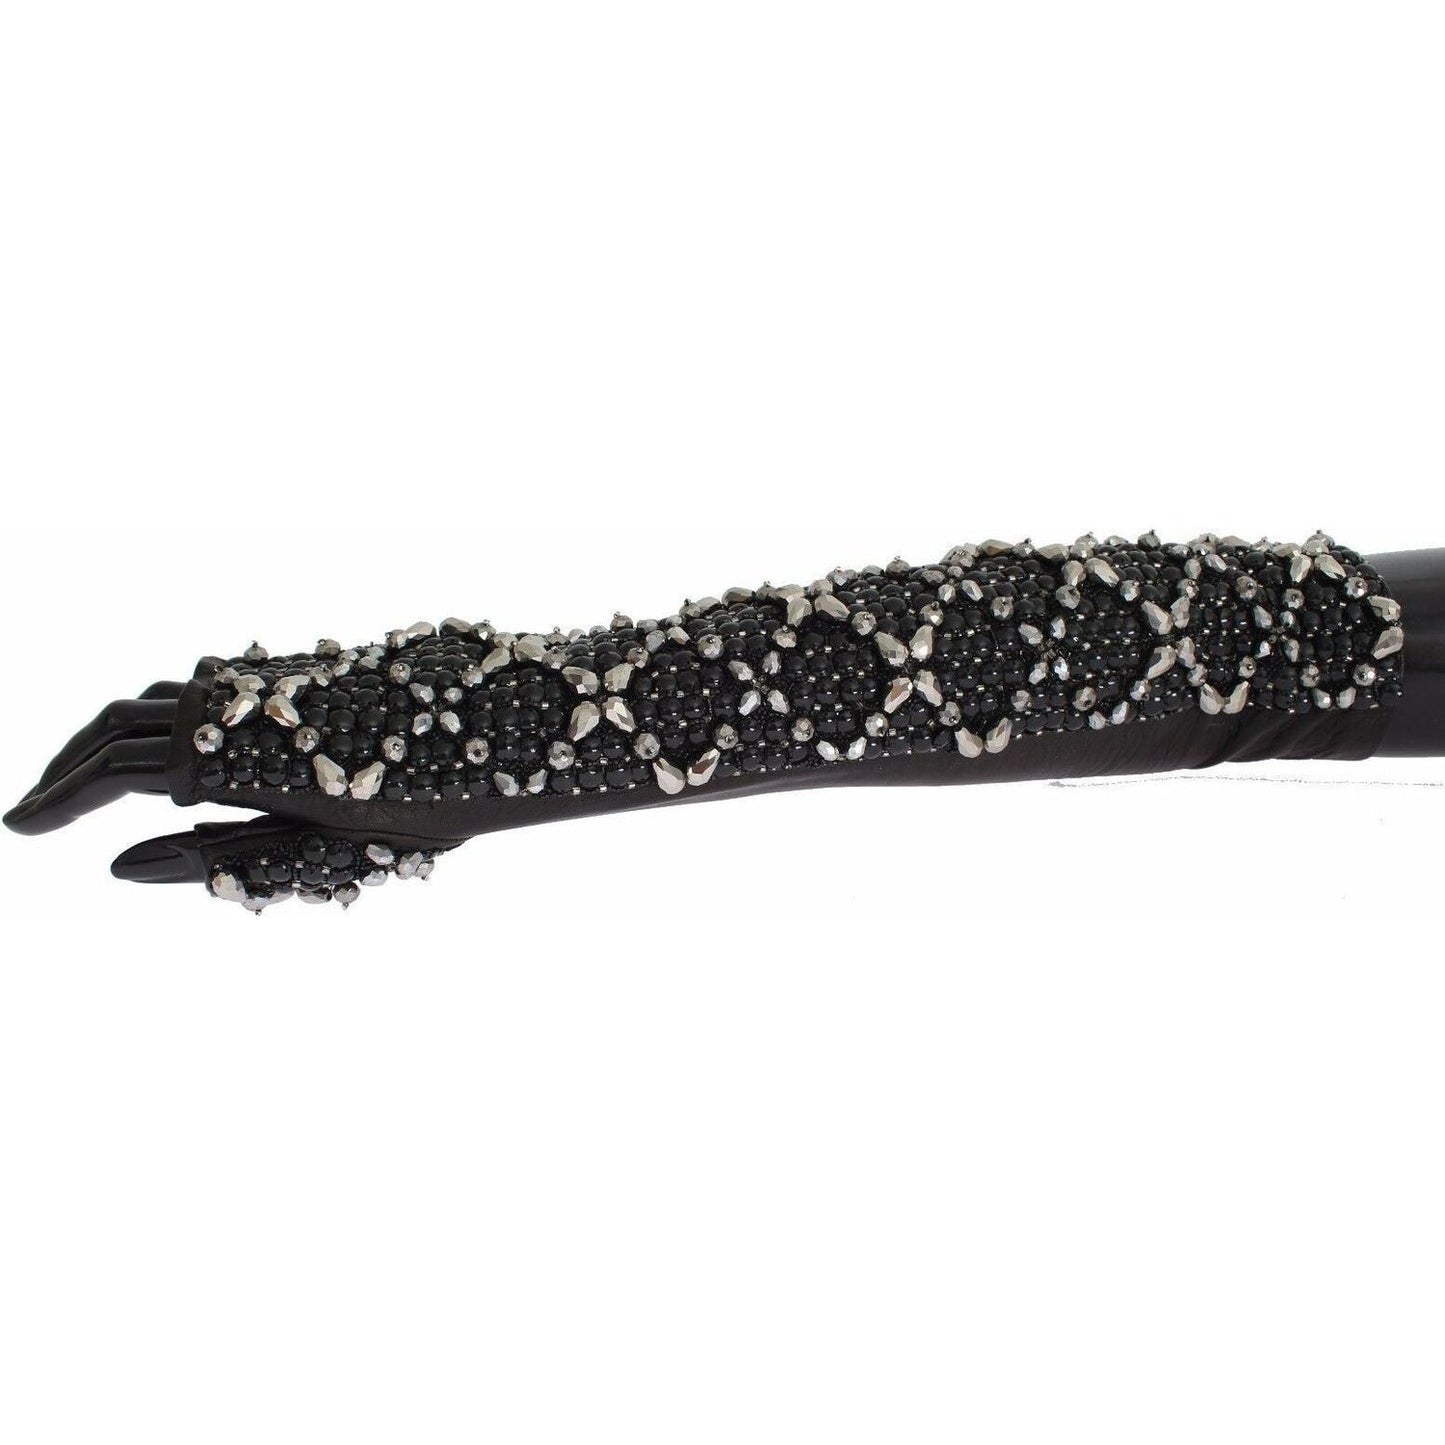 Dolce & Gabbana Elegant Crystal Beaded Leather Gloves black-leather-crystal-beaded-finger-free-gloves-1